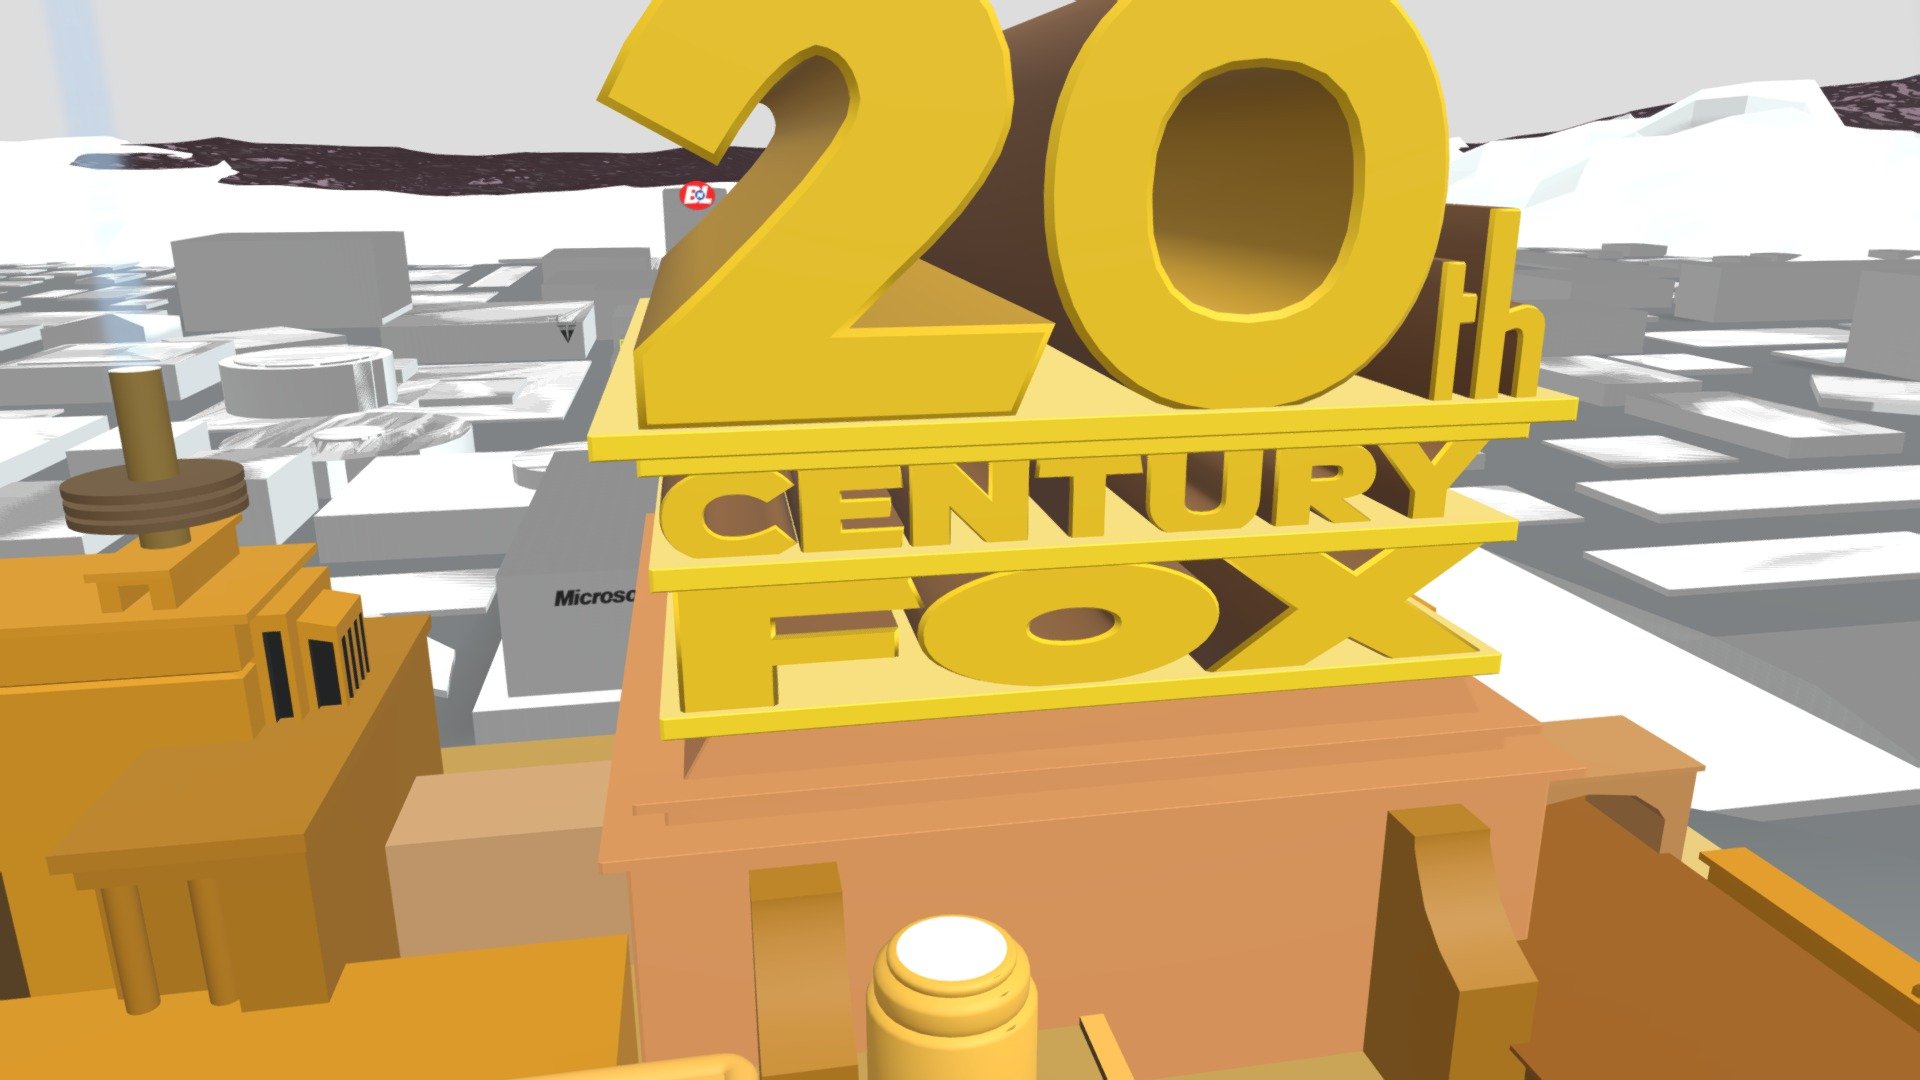 Century fox заставка